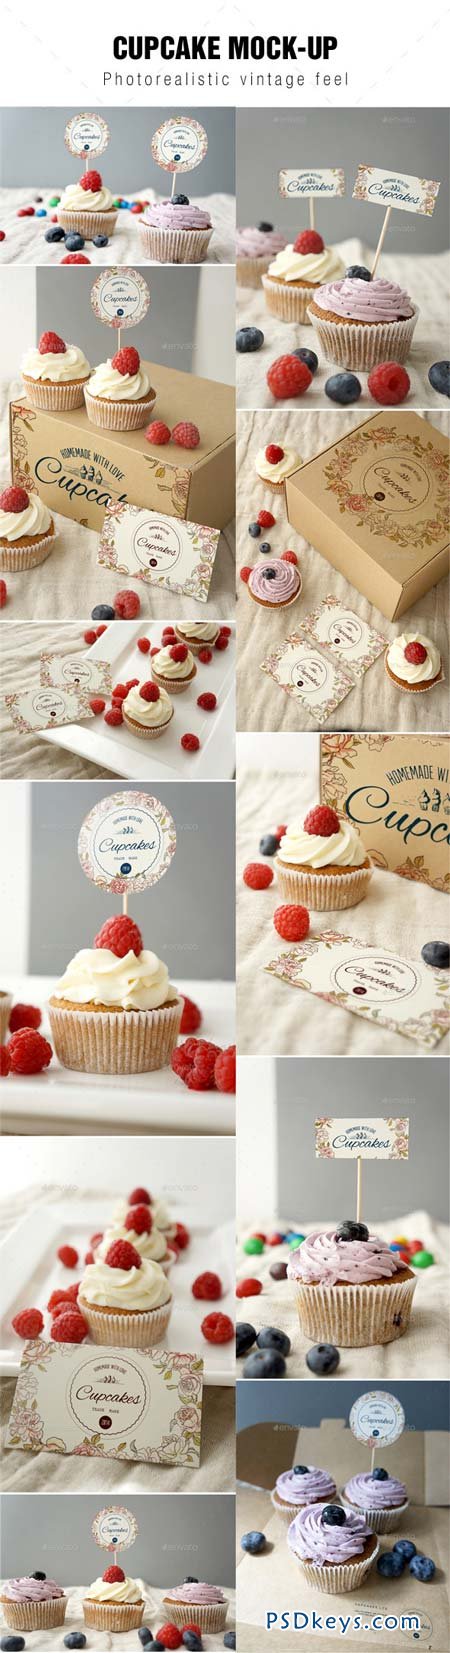 Download Cupcake Free Download Photoshop Vector Stock Image Via Torrent Zippyshare From Psdkeys Com